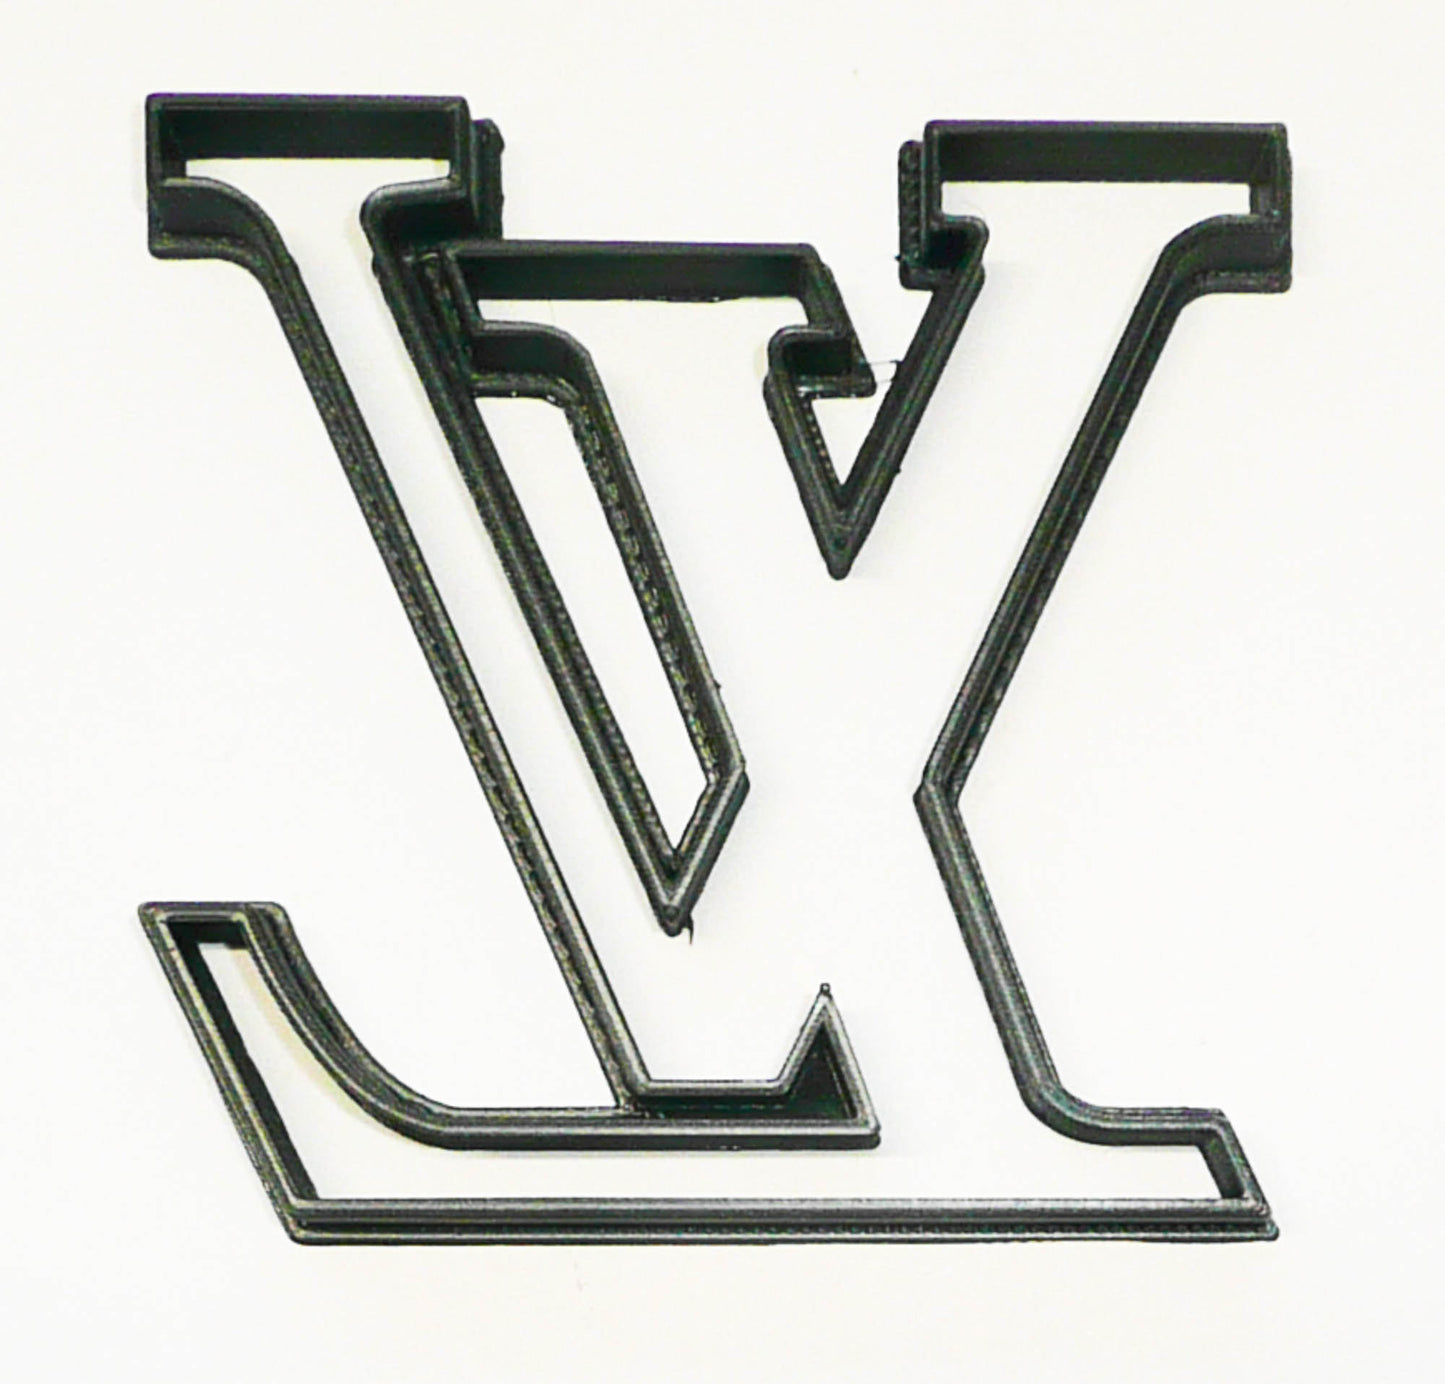 LV Louis Vuitton Fondant Cutter